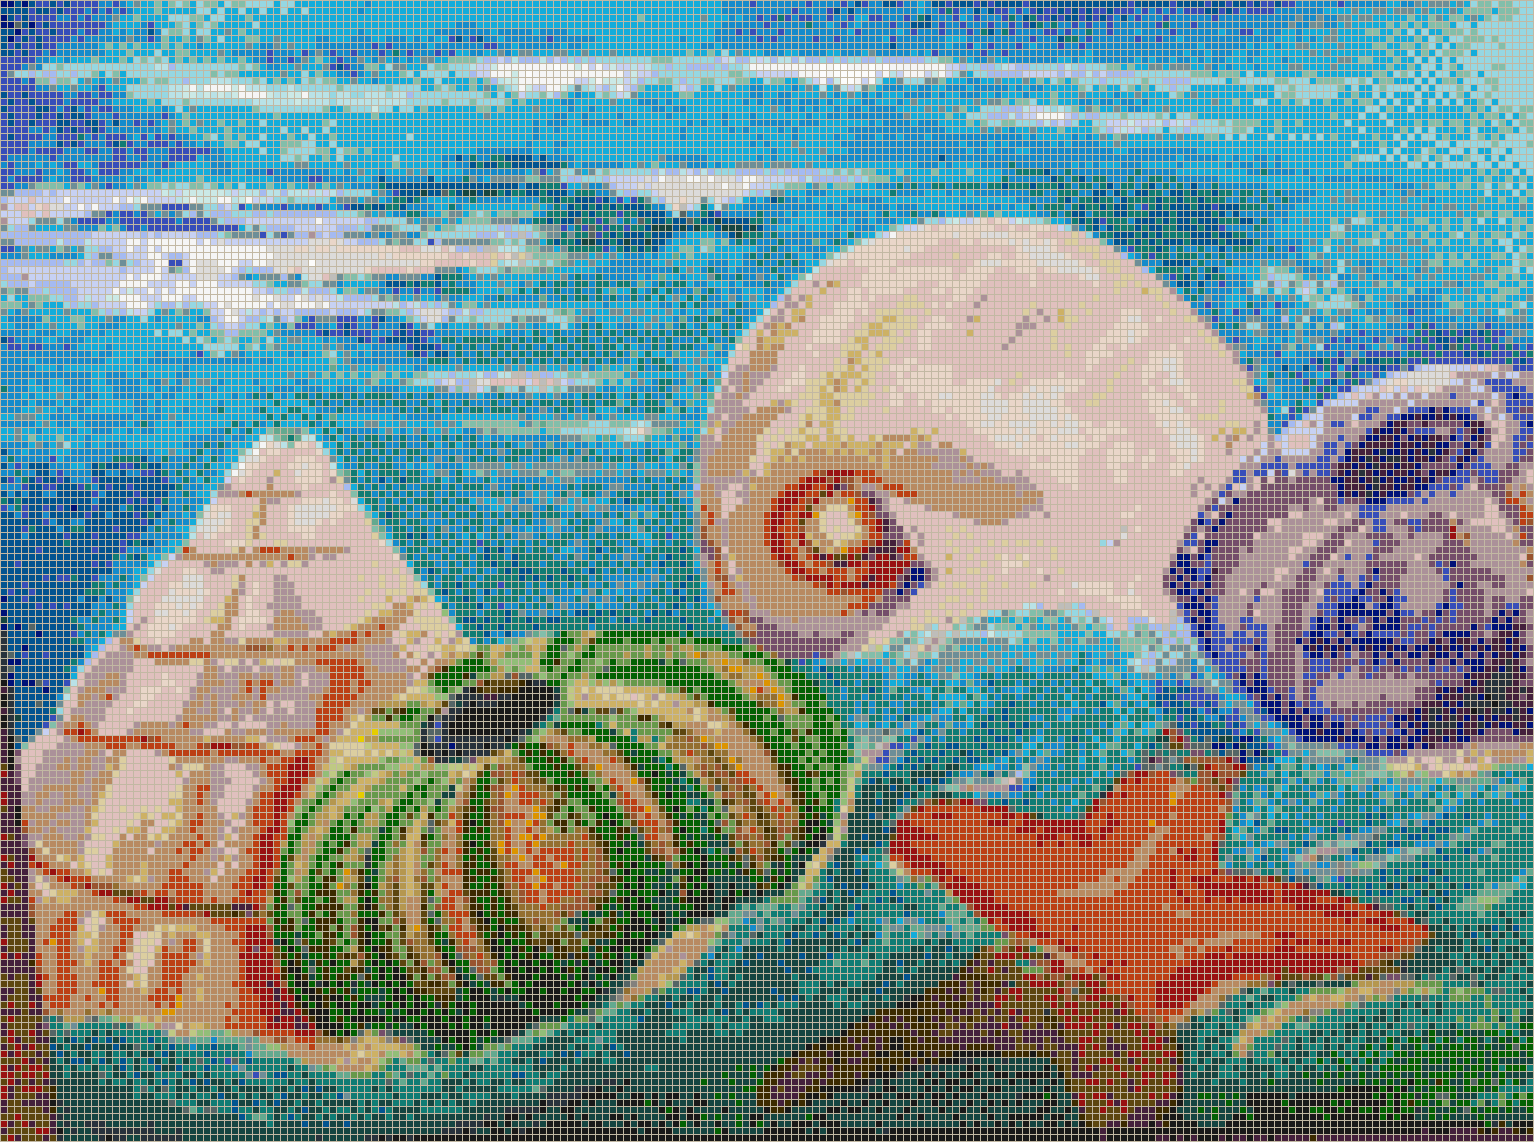 Swirling Sea Shells - Mosaic Tile Picture Art